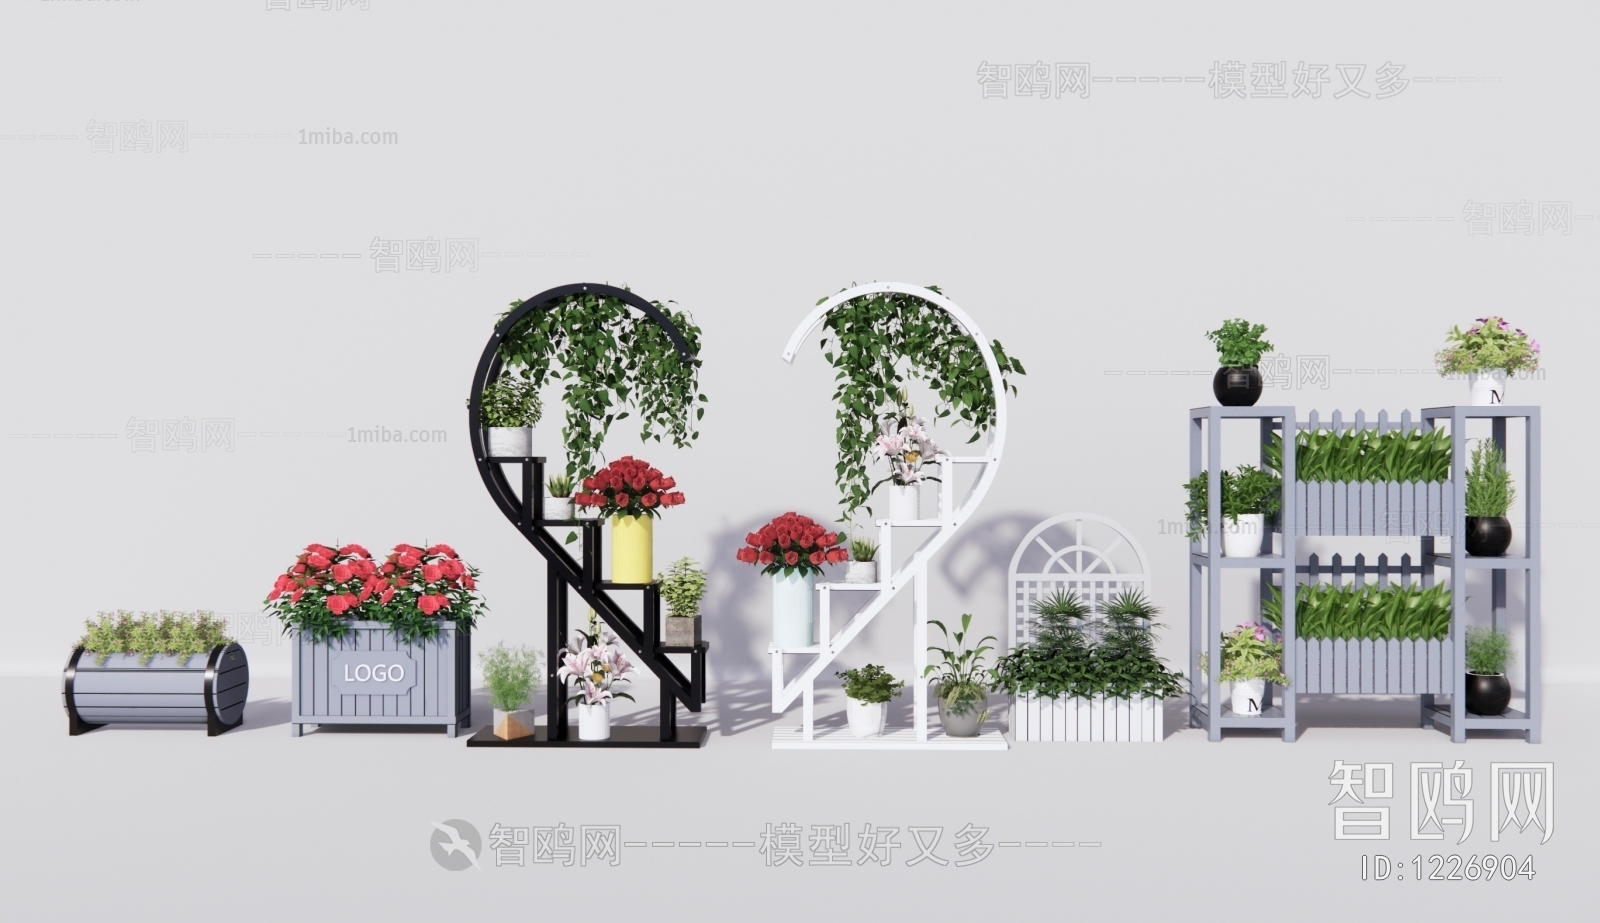 Modern Flower Shelf